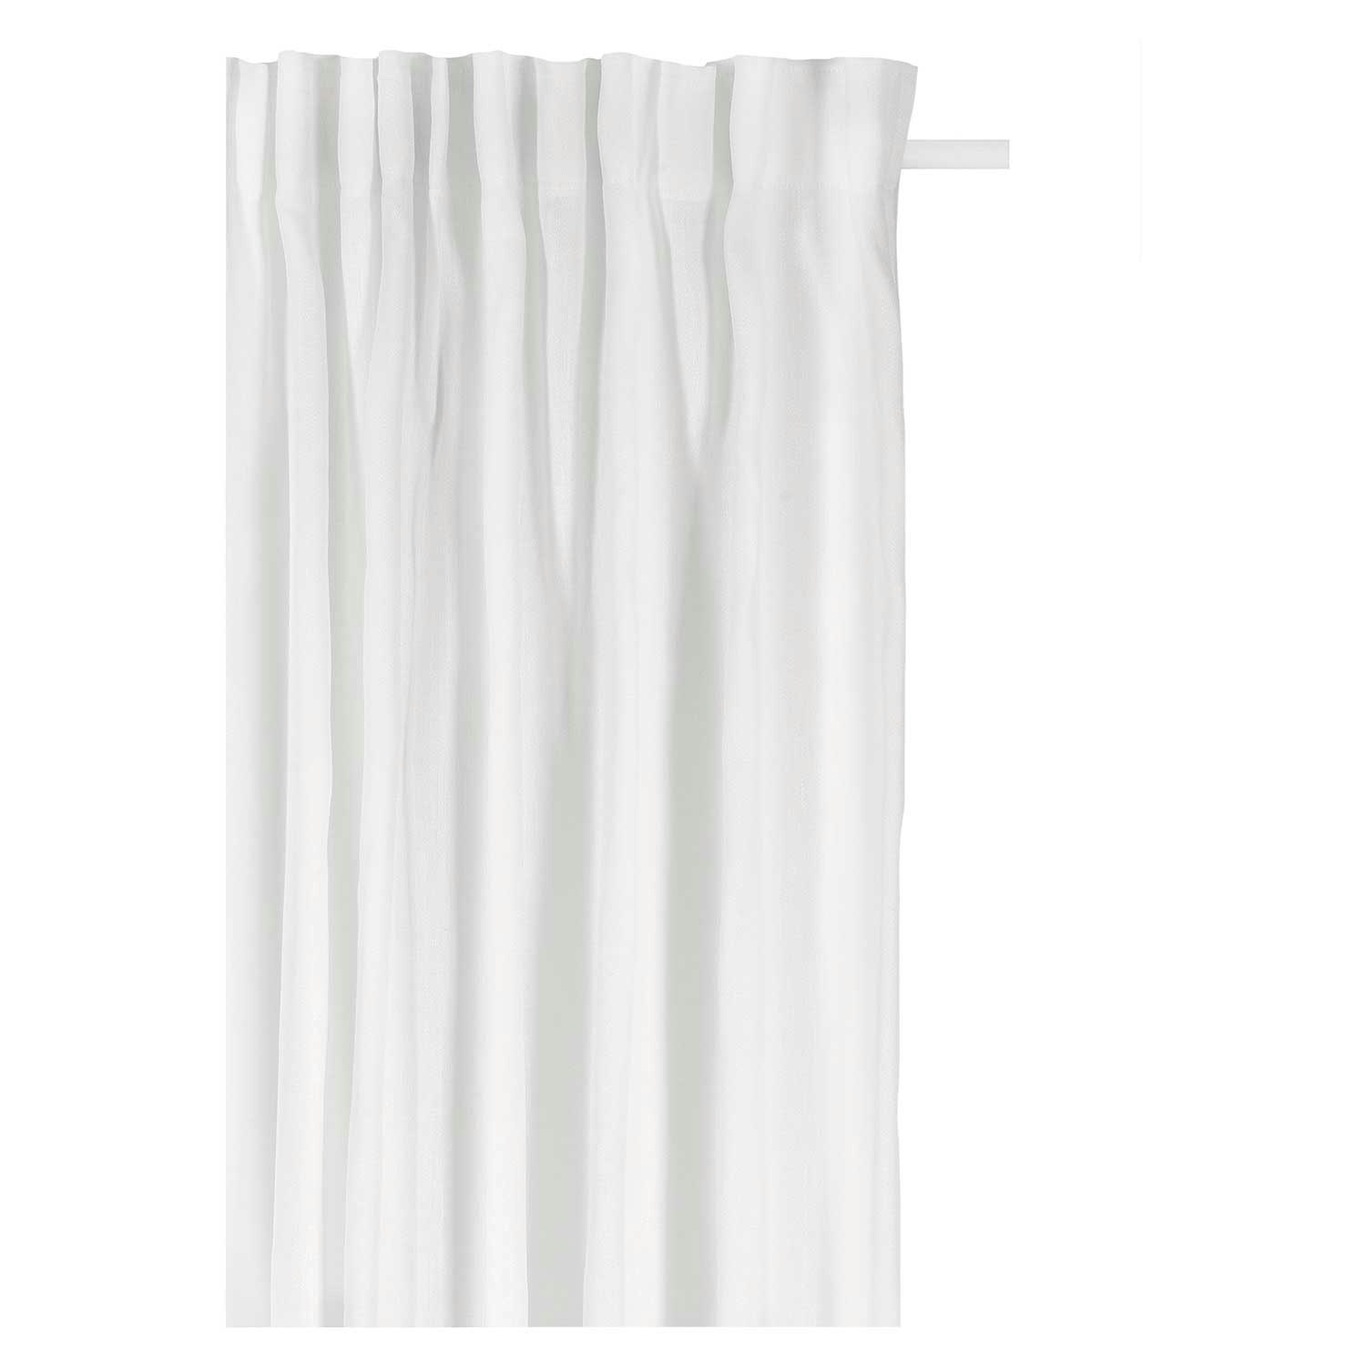 Svealand Curtain With Heading Tape 145x290 cm, White